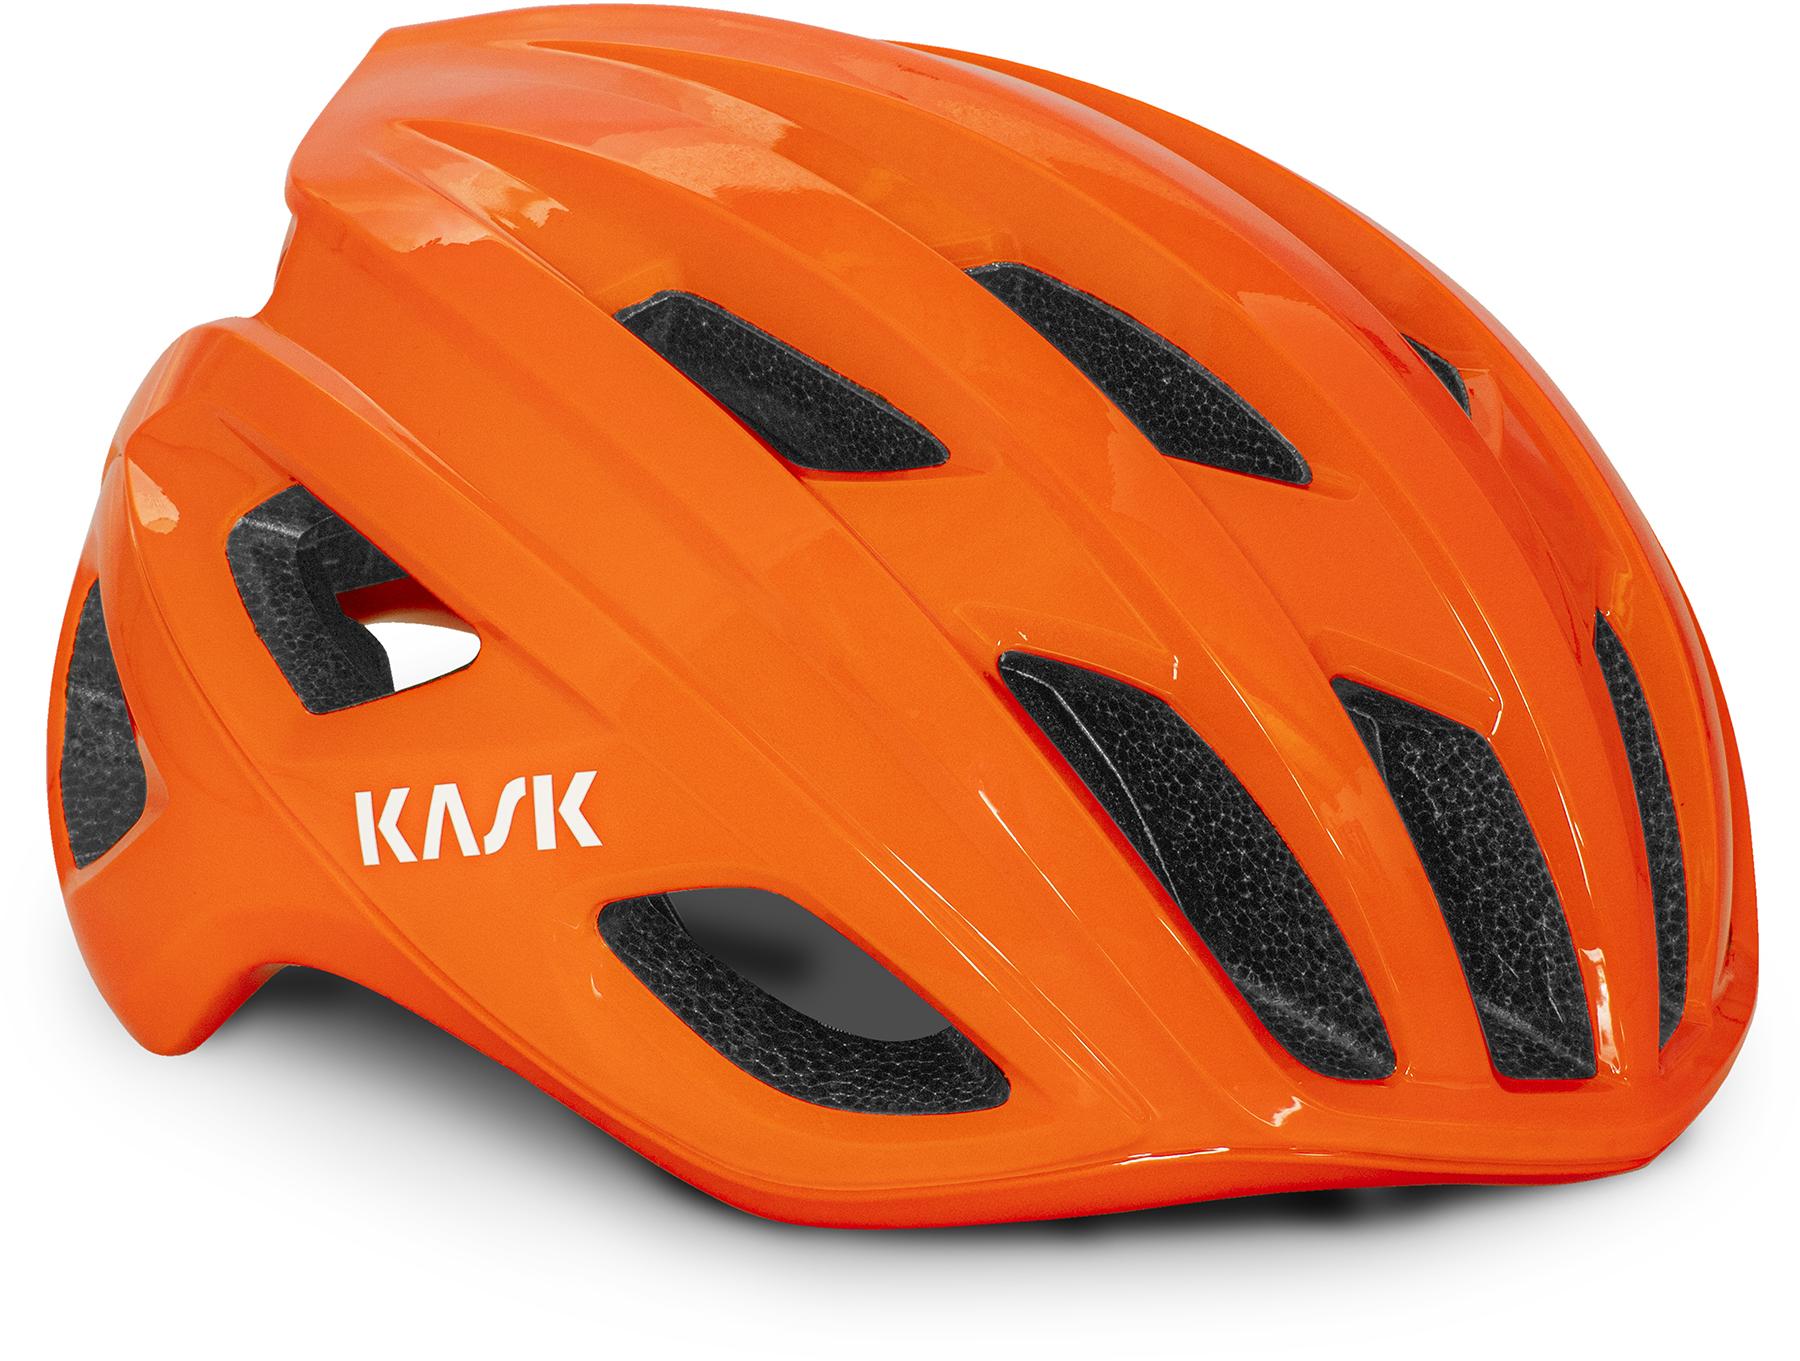 Kask Mojito3 Road Cycling Helmet (wg11) - Orange Fluo